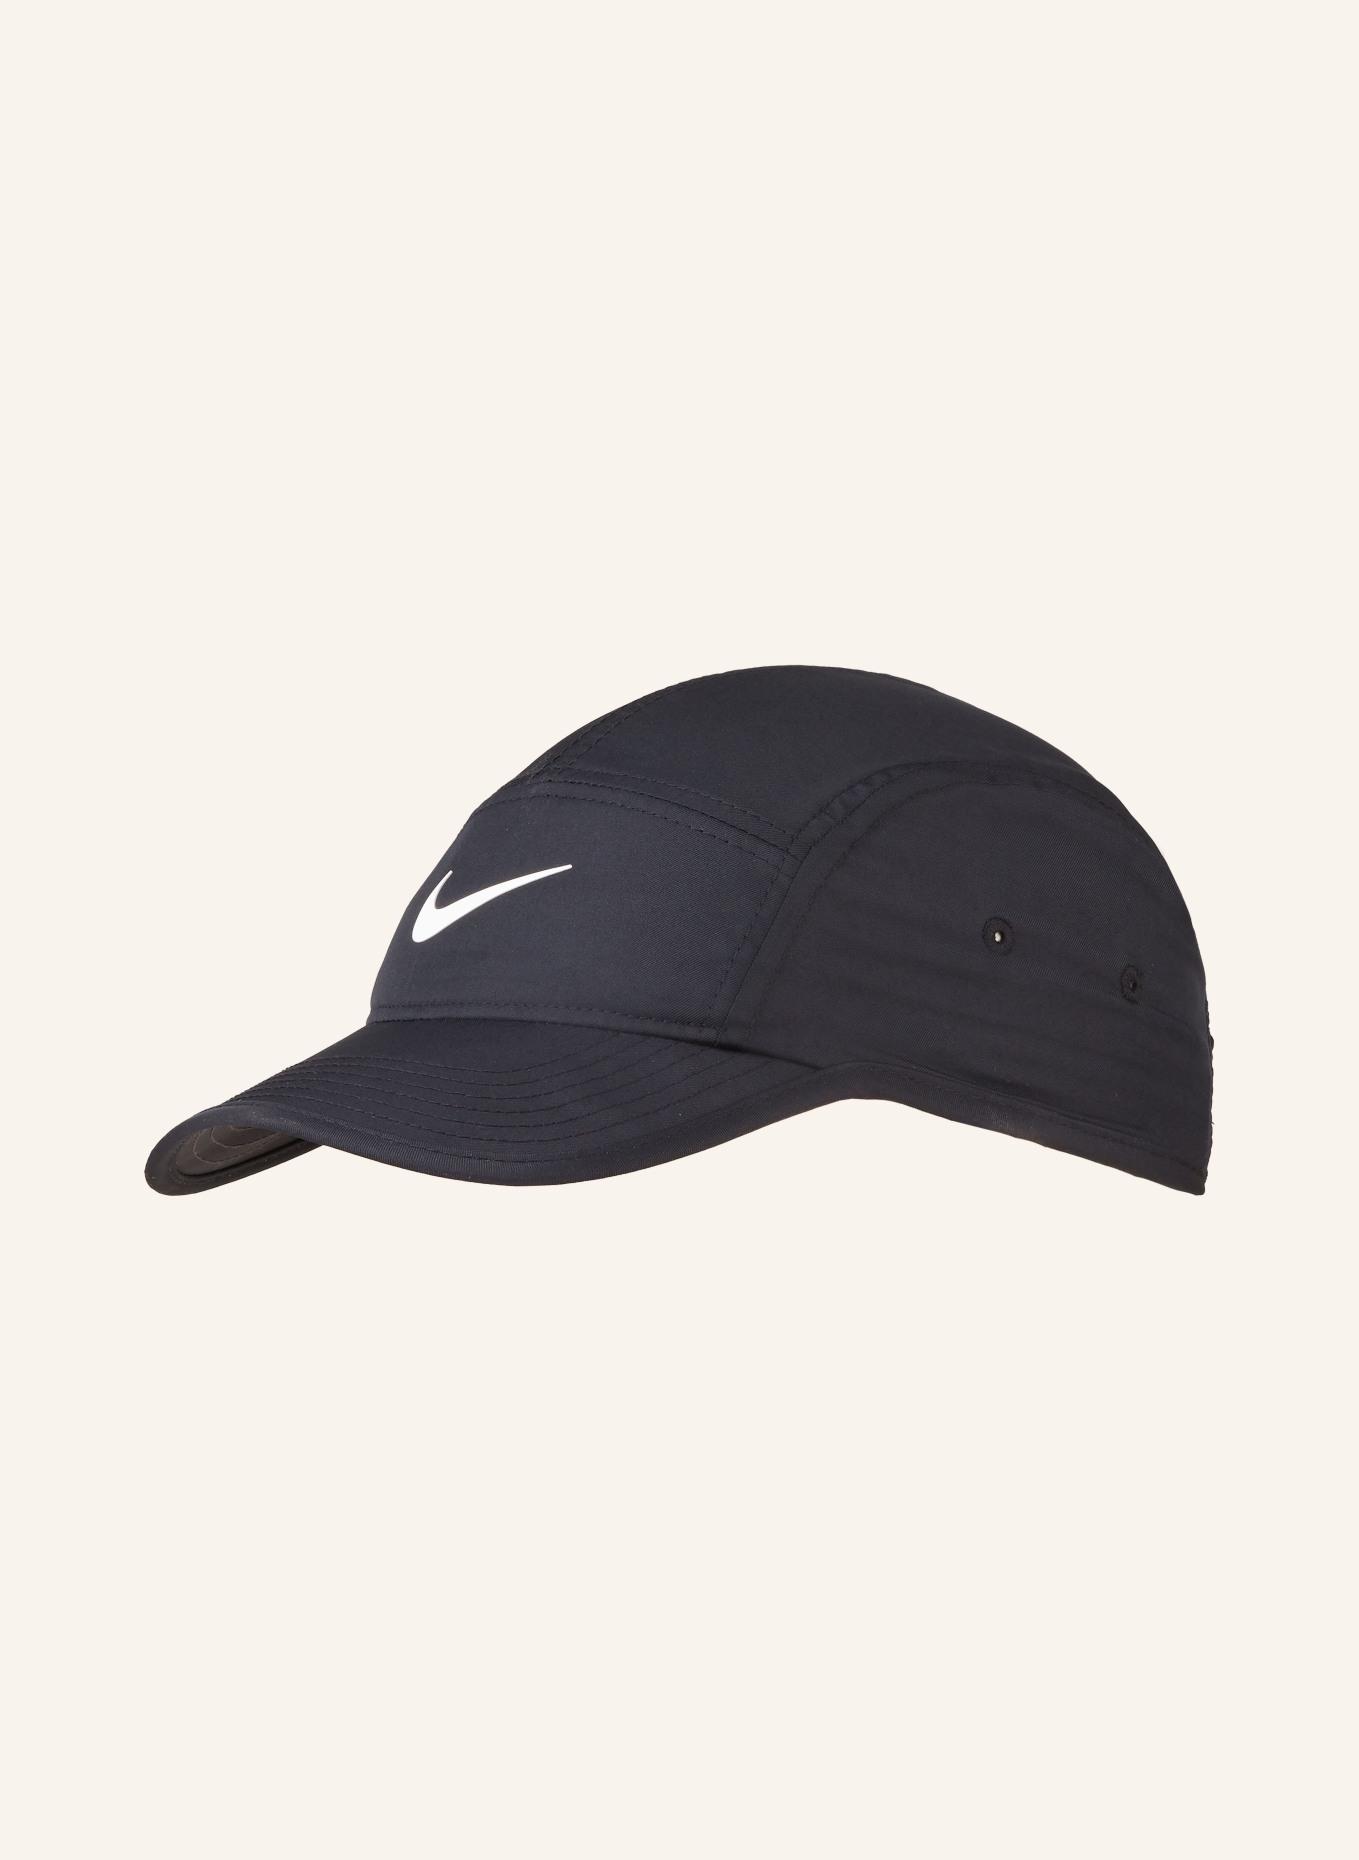 Nike Cap DRI-FIT FLY, Farbe: SCHWARZ (Bild 1)